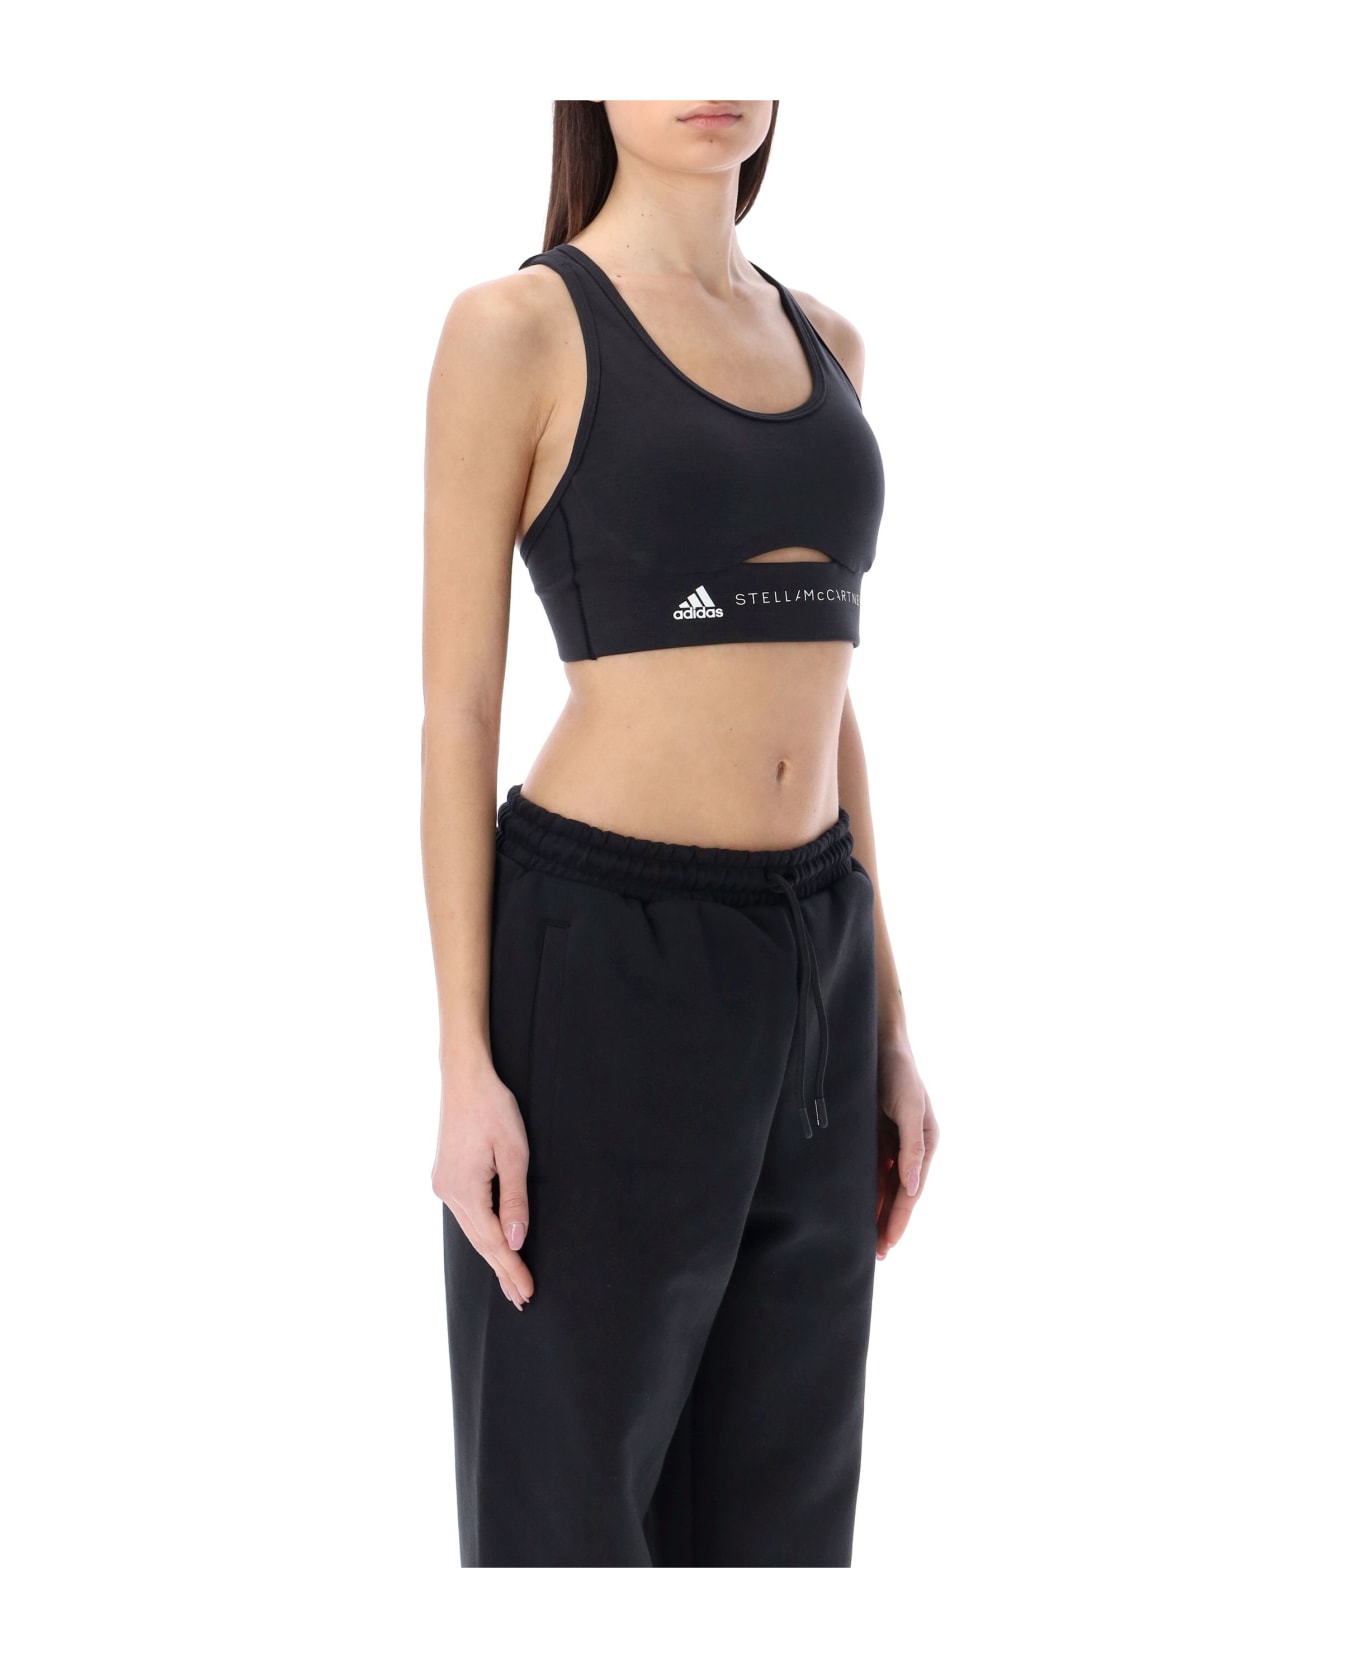 Adidas by Stella McCartney Truestrength Yoga Medium Support Sports Bra - Black/white